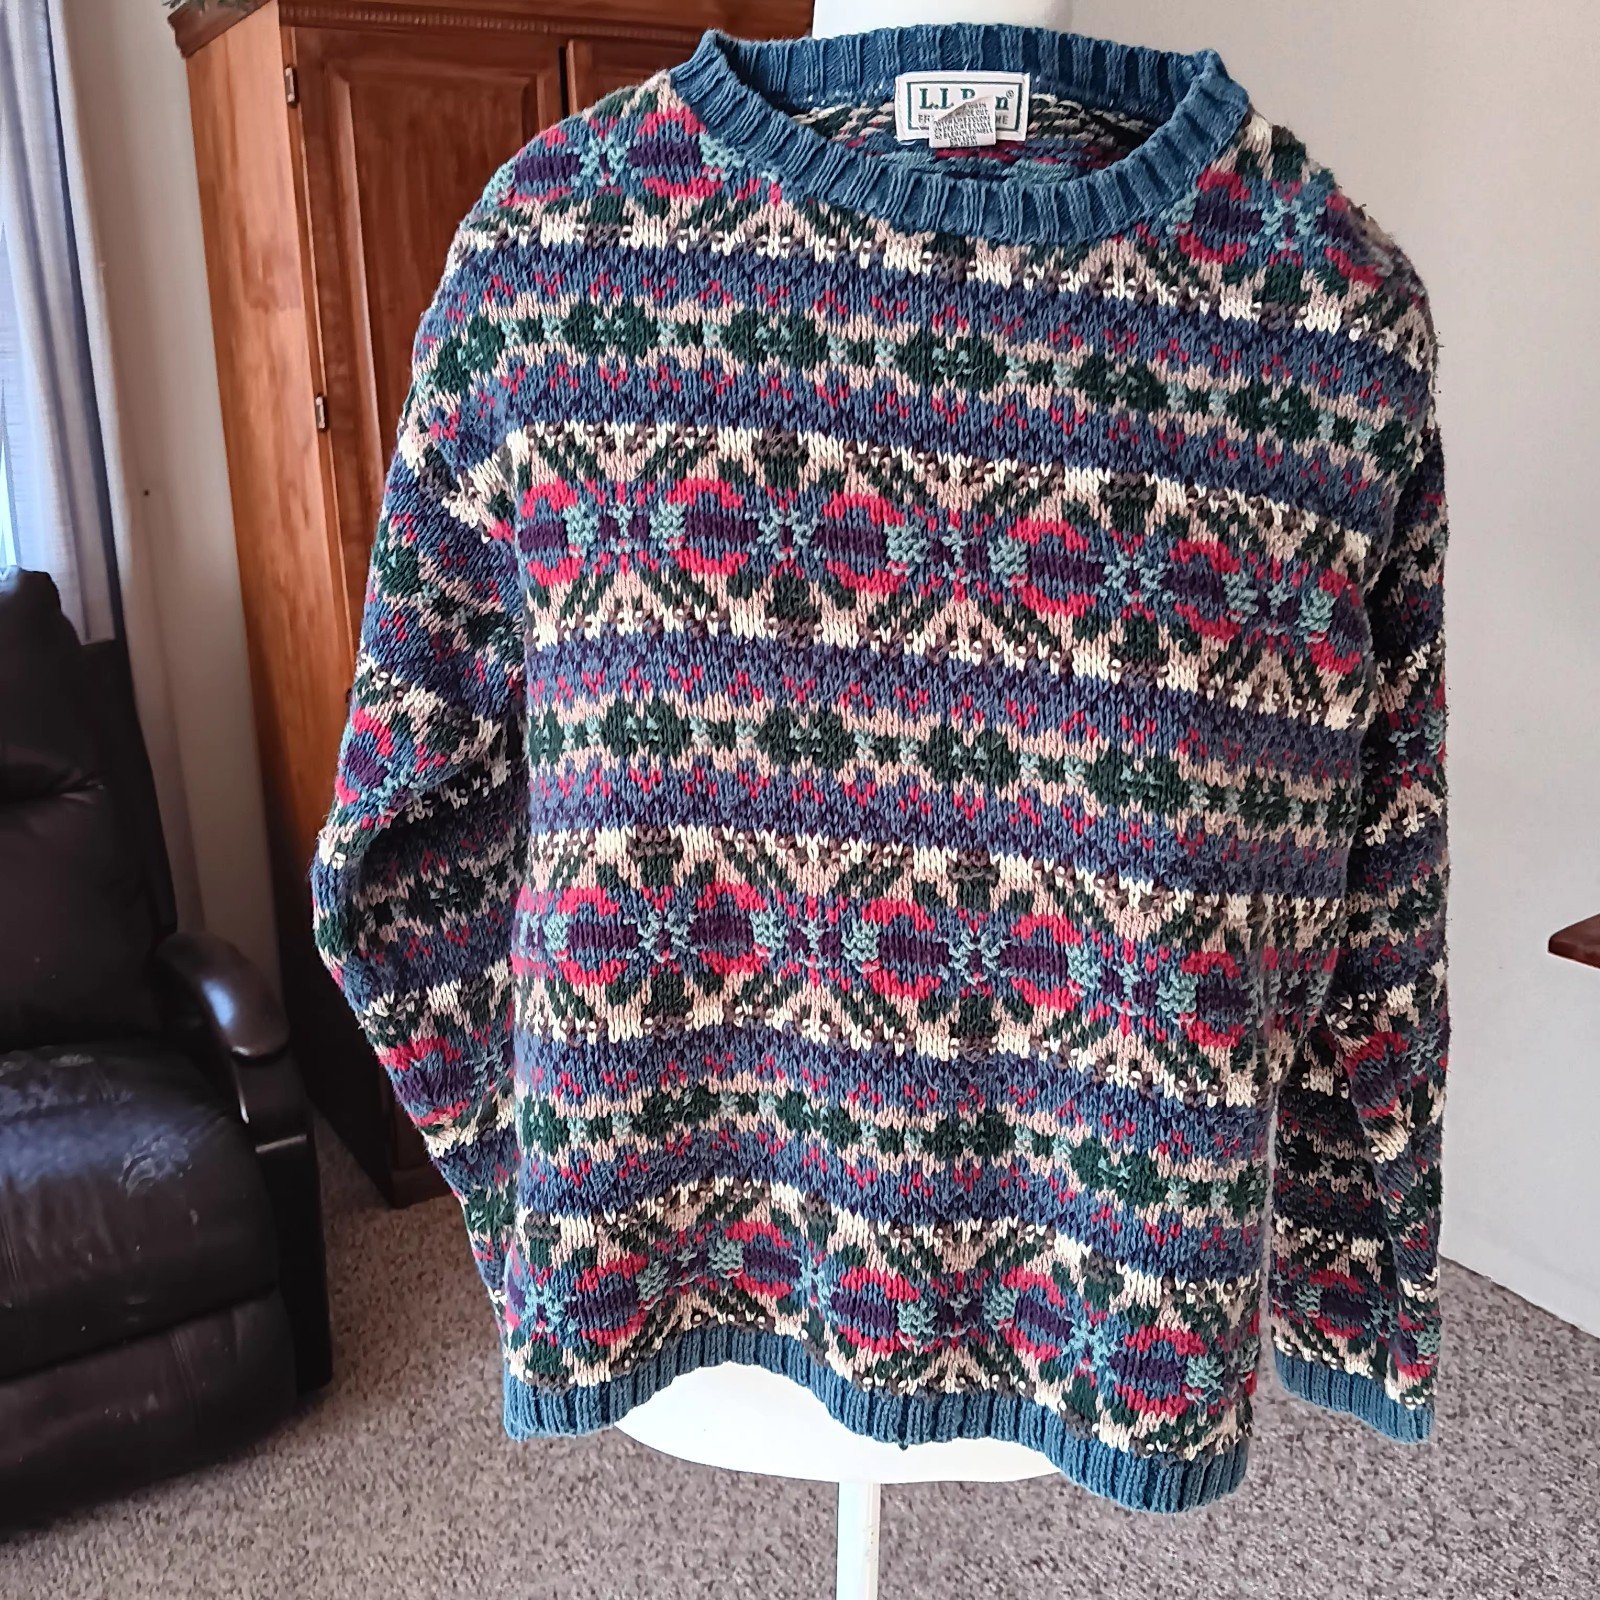 Affordable L.L.Bean Sweater womens size medium muk9hc57